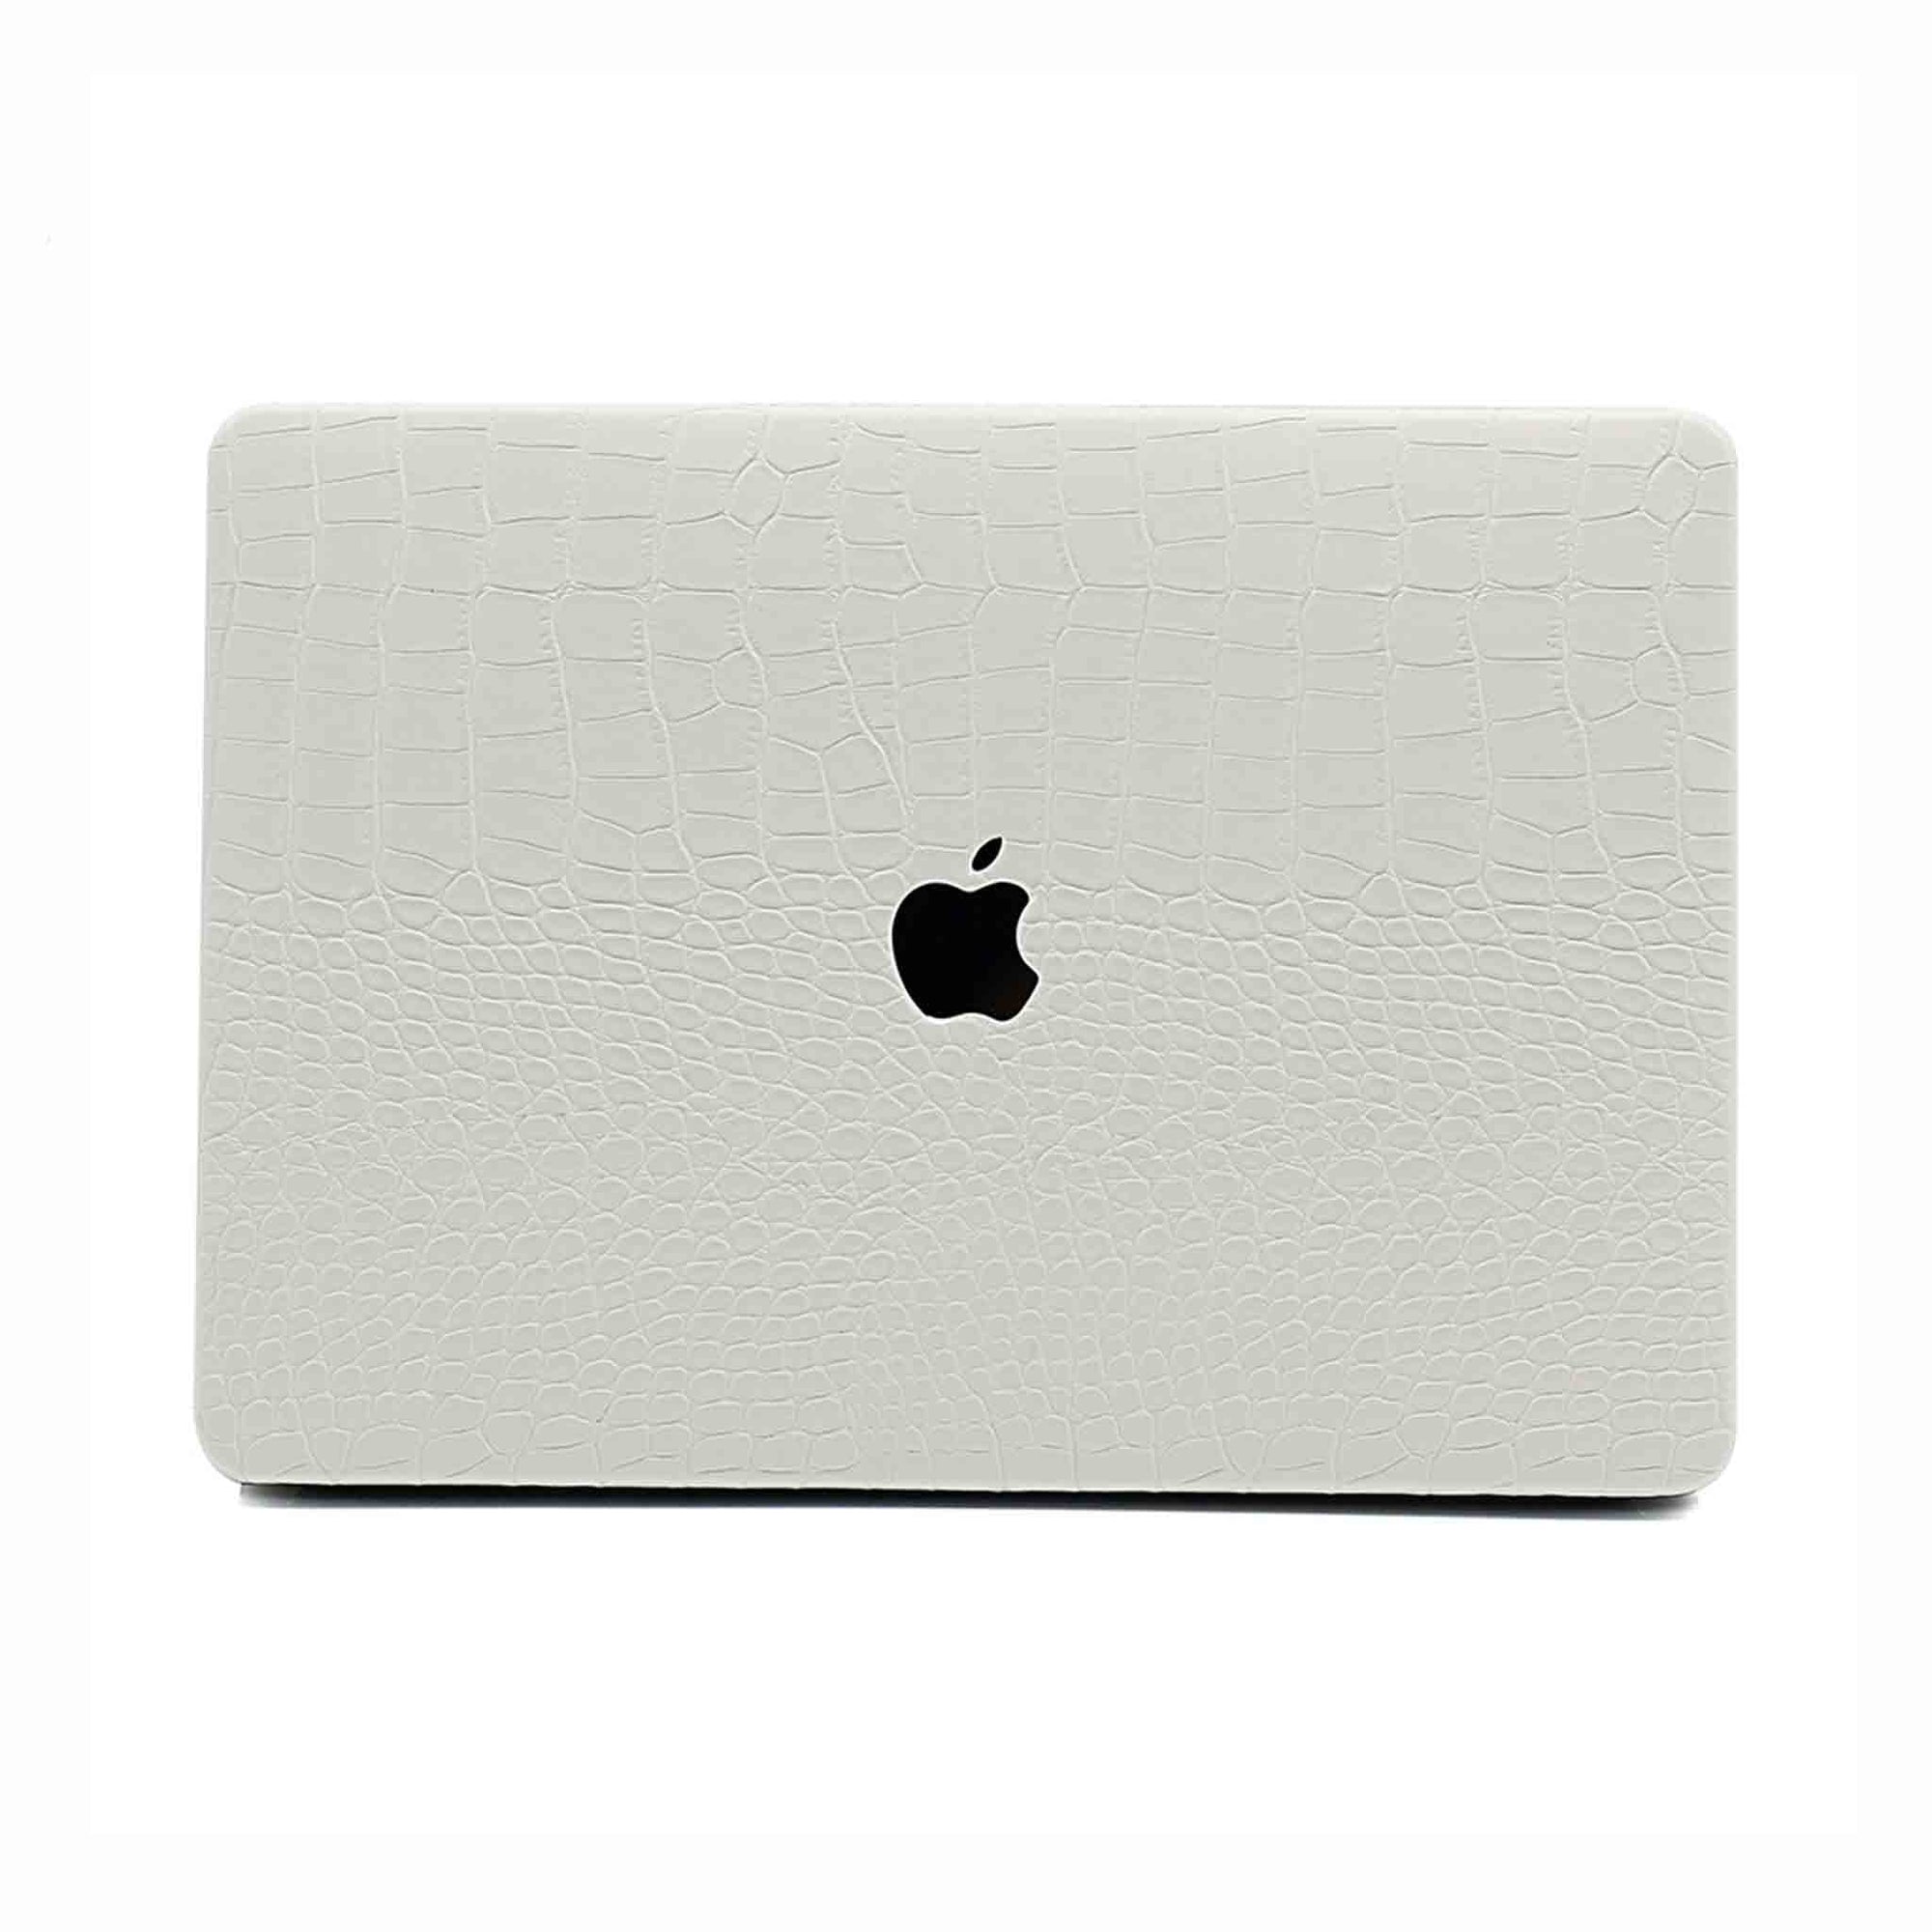 Plastic Macbook Hard Shell Cover